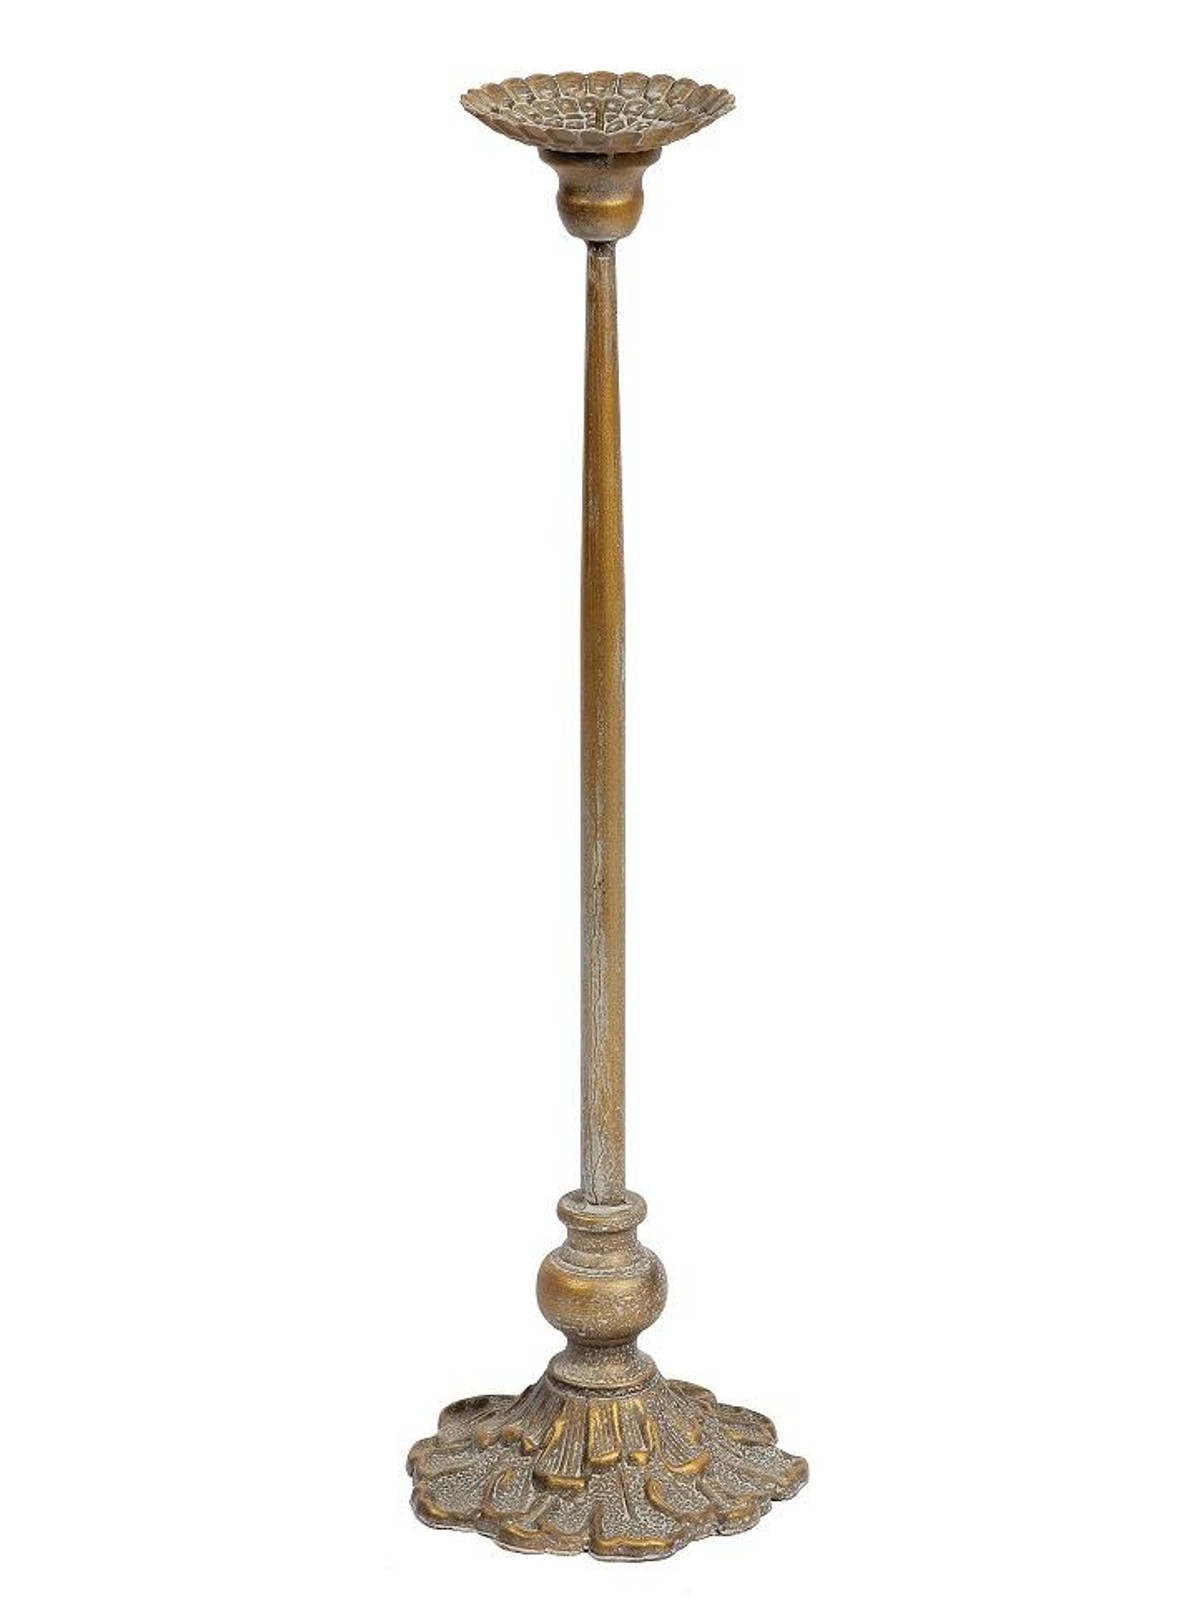 Metal candlestick